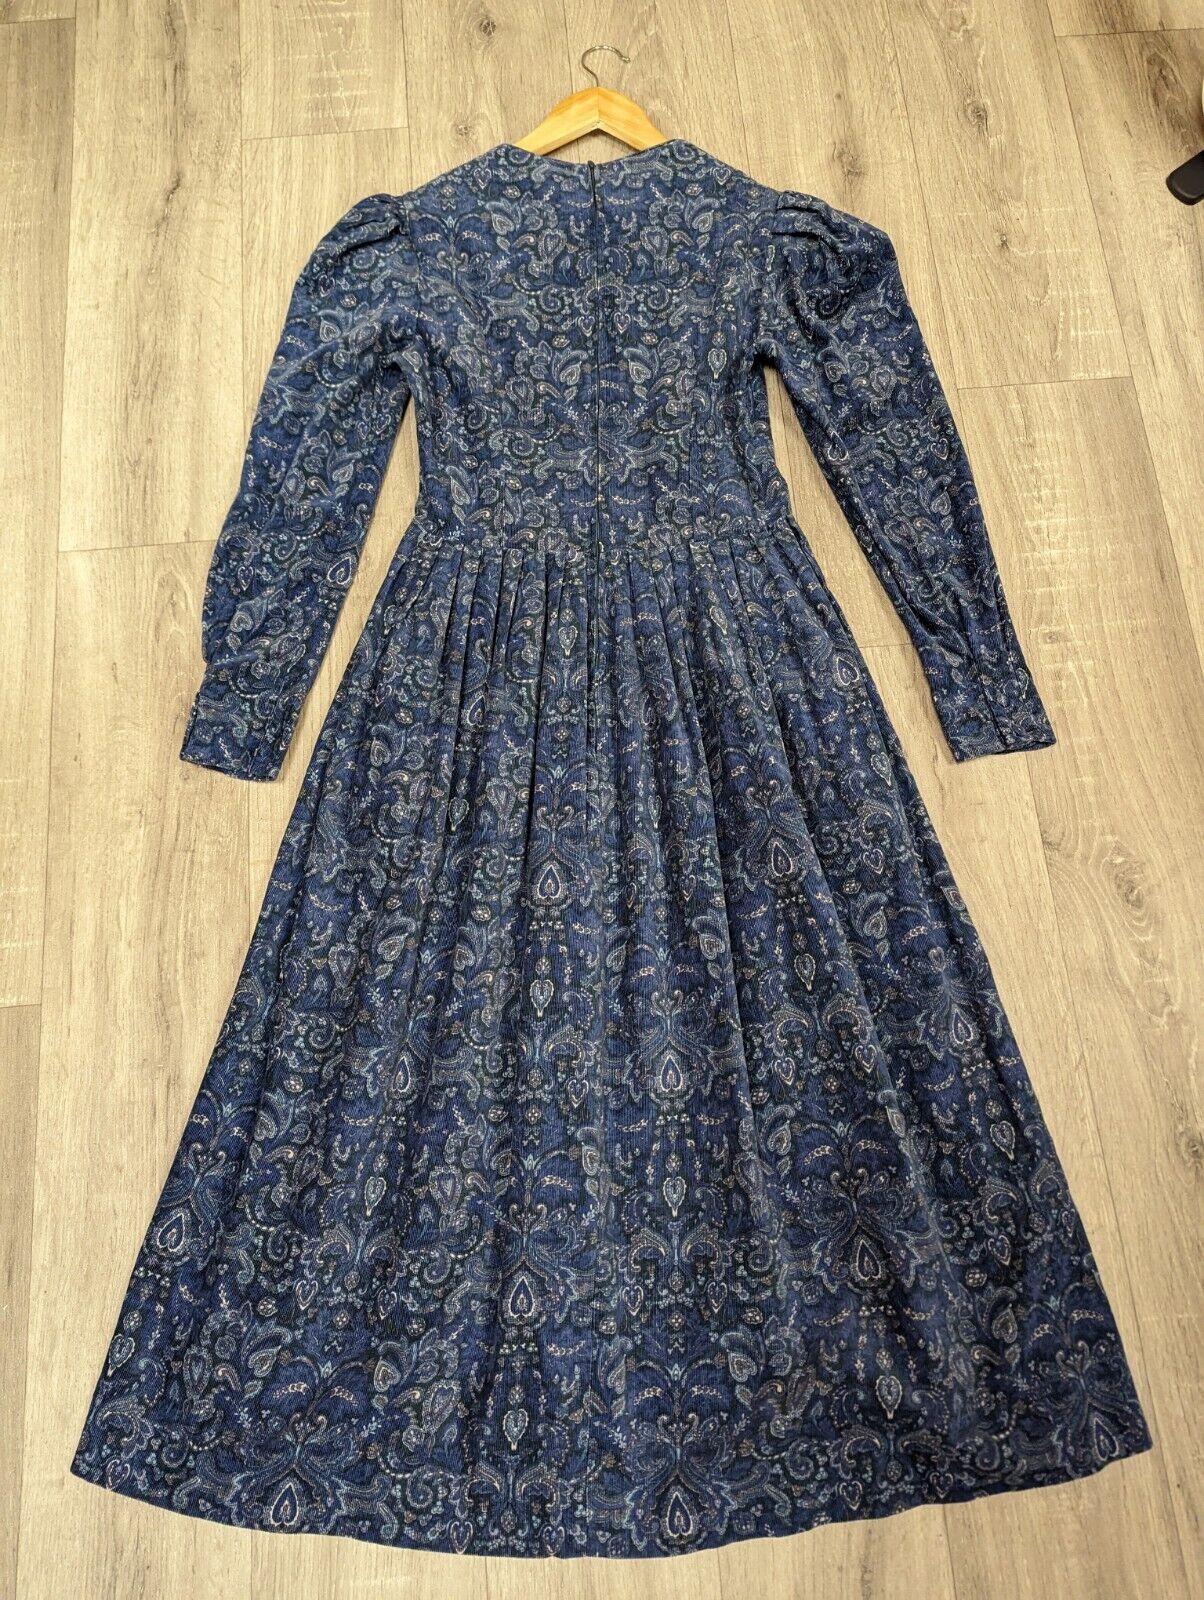 Gorgeous Vintage 1980s Laura Ashley Blue Needlecord Dress - Size 8 | eBay